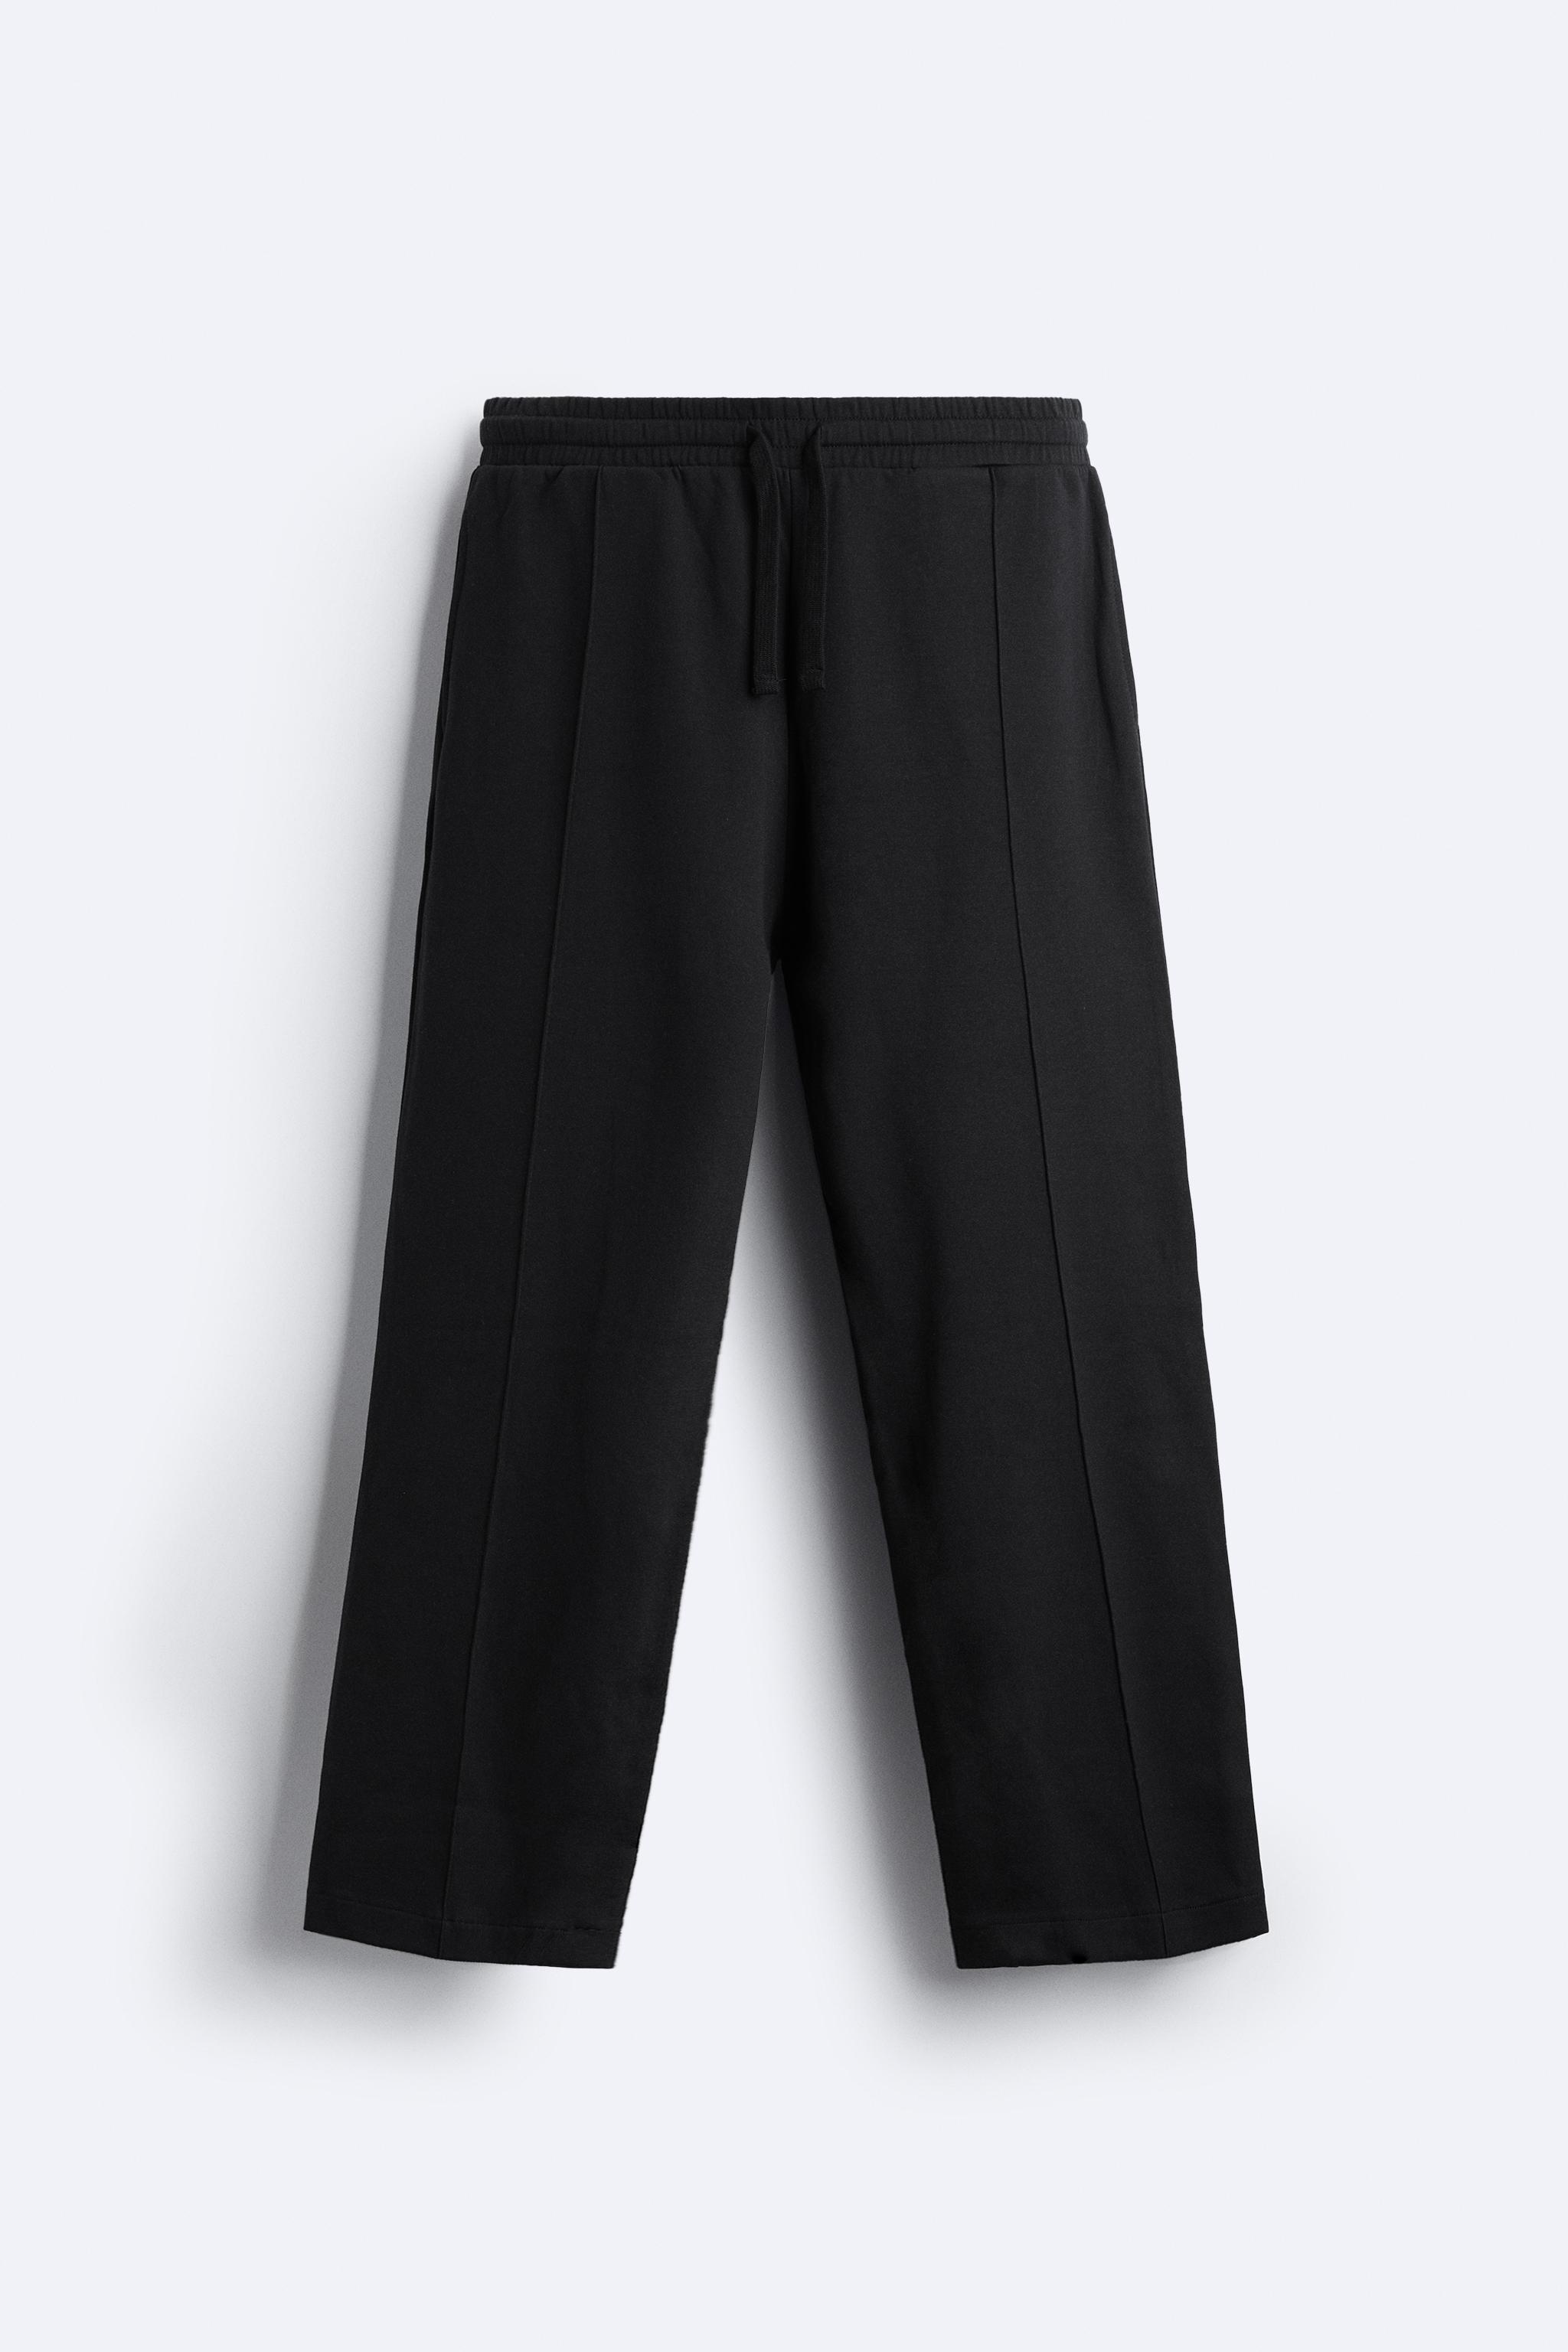 Zara Black Gray Casual Pants Size XS - 41% off